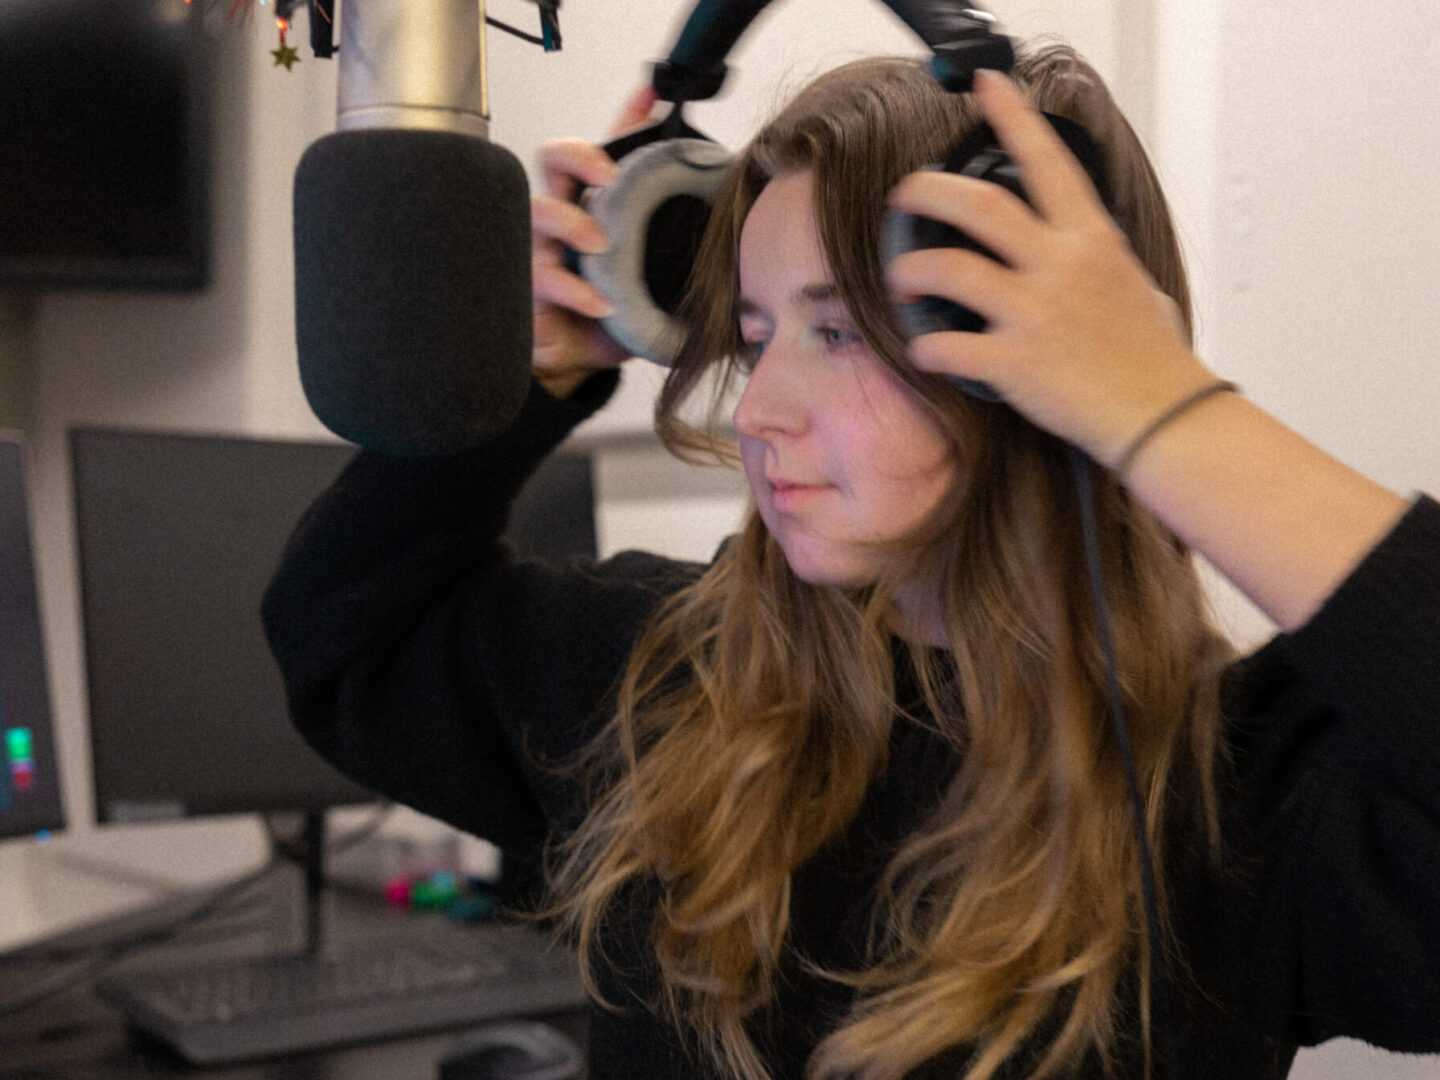 lisan (she/her) in a radio studio putting headphones on